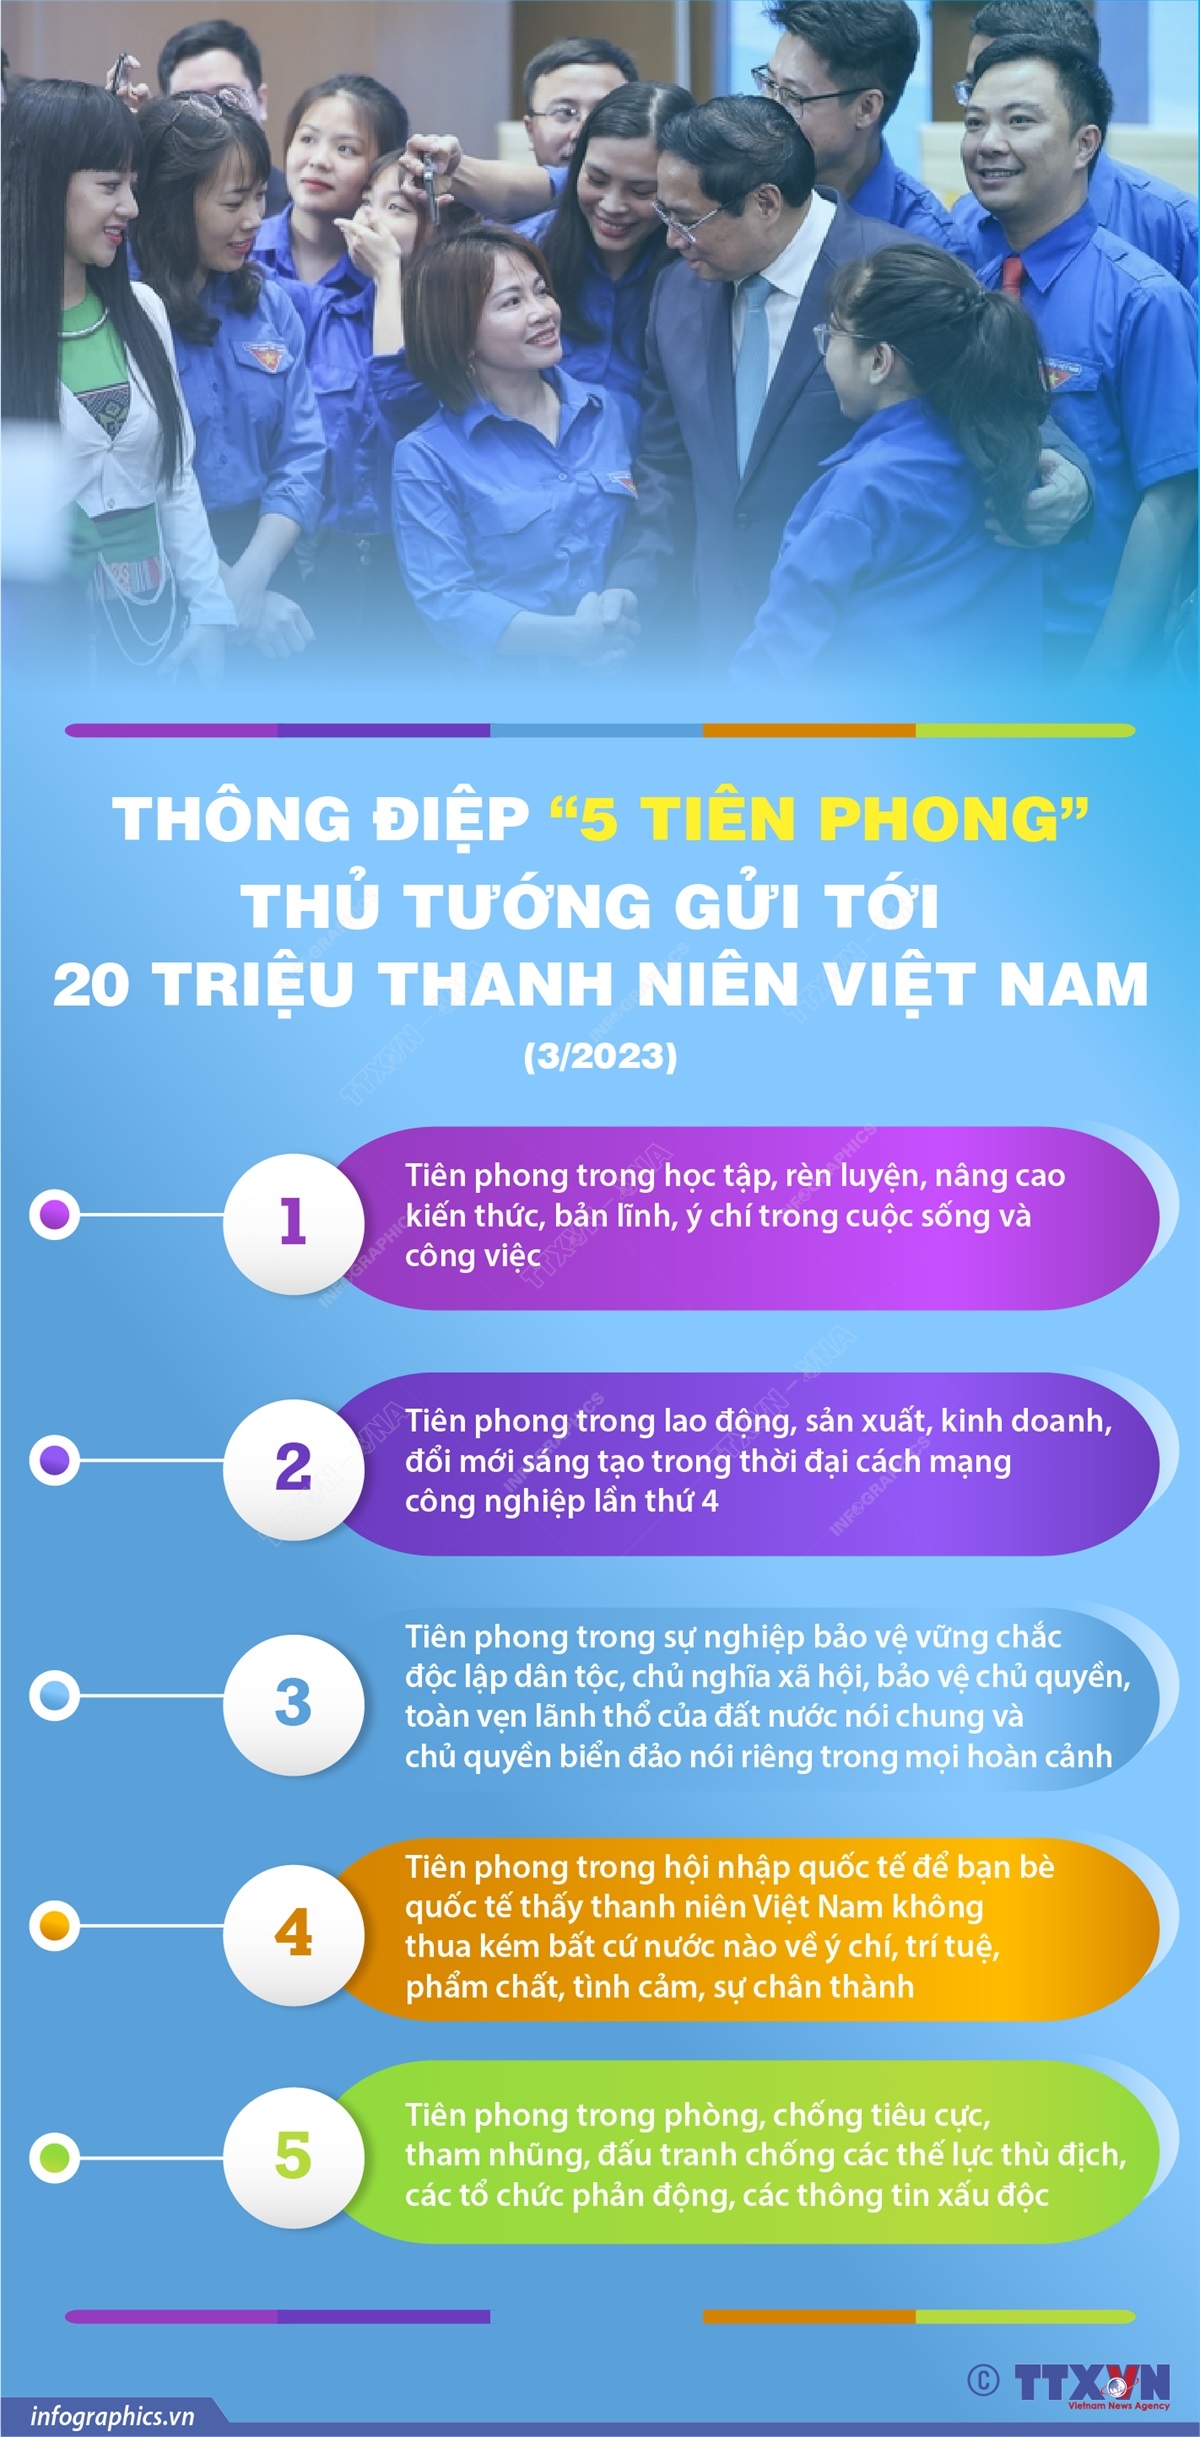 vna potal thong diep “5 tien phong” thu tuong gui toi 20 trieu thanh nien viet nam 062302132 (1)